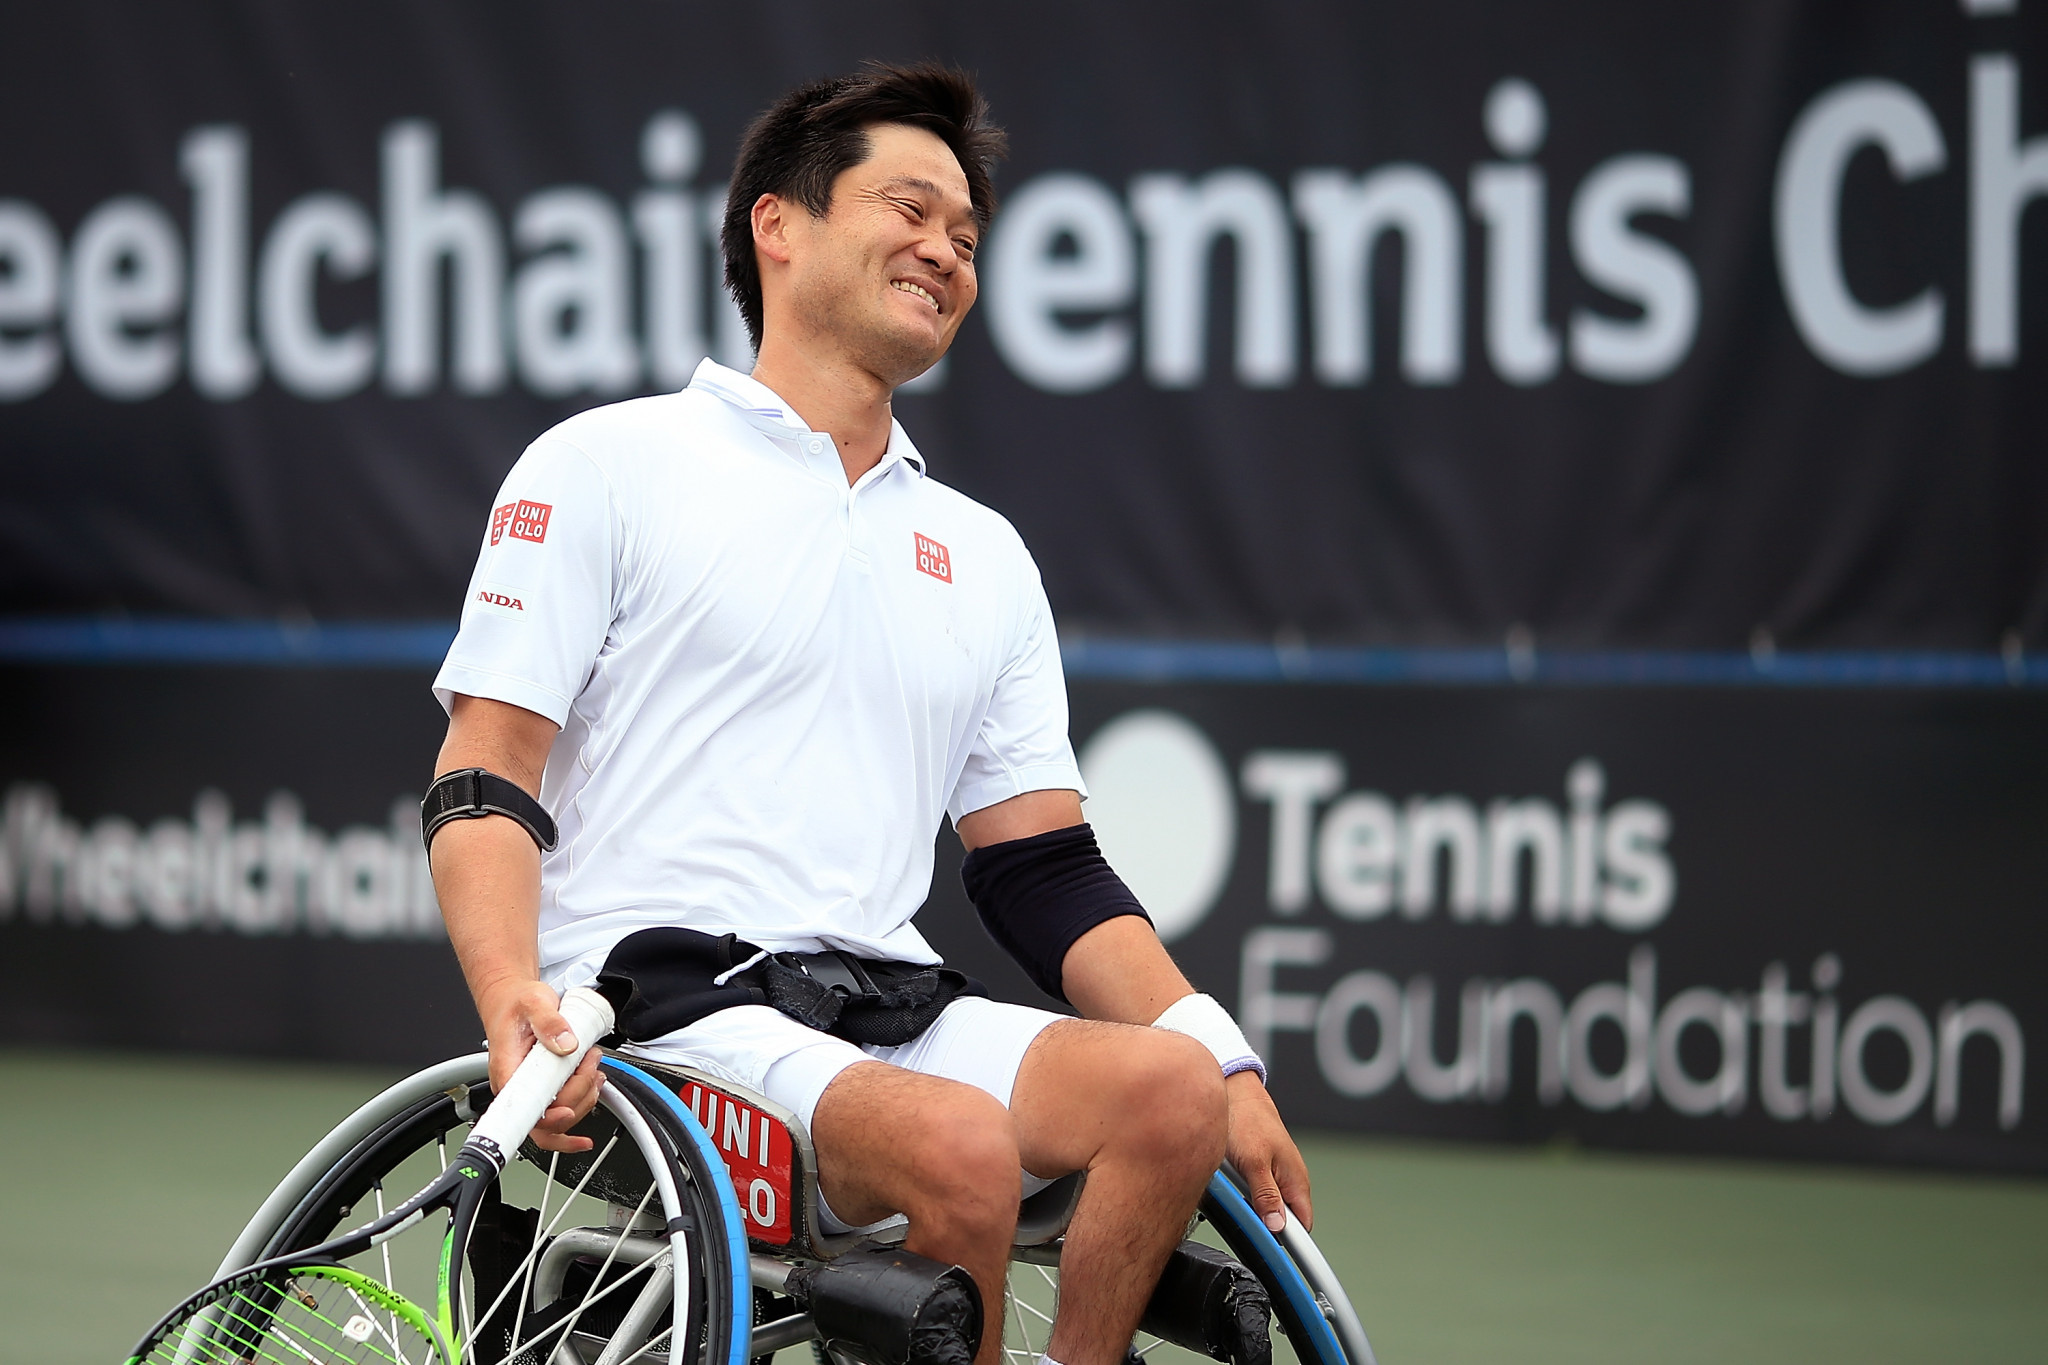 Kunieda reaches final of Wheelchair Tennis Masters in Orlando